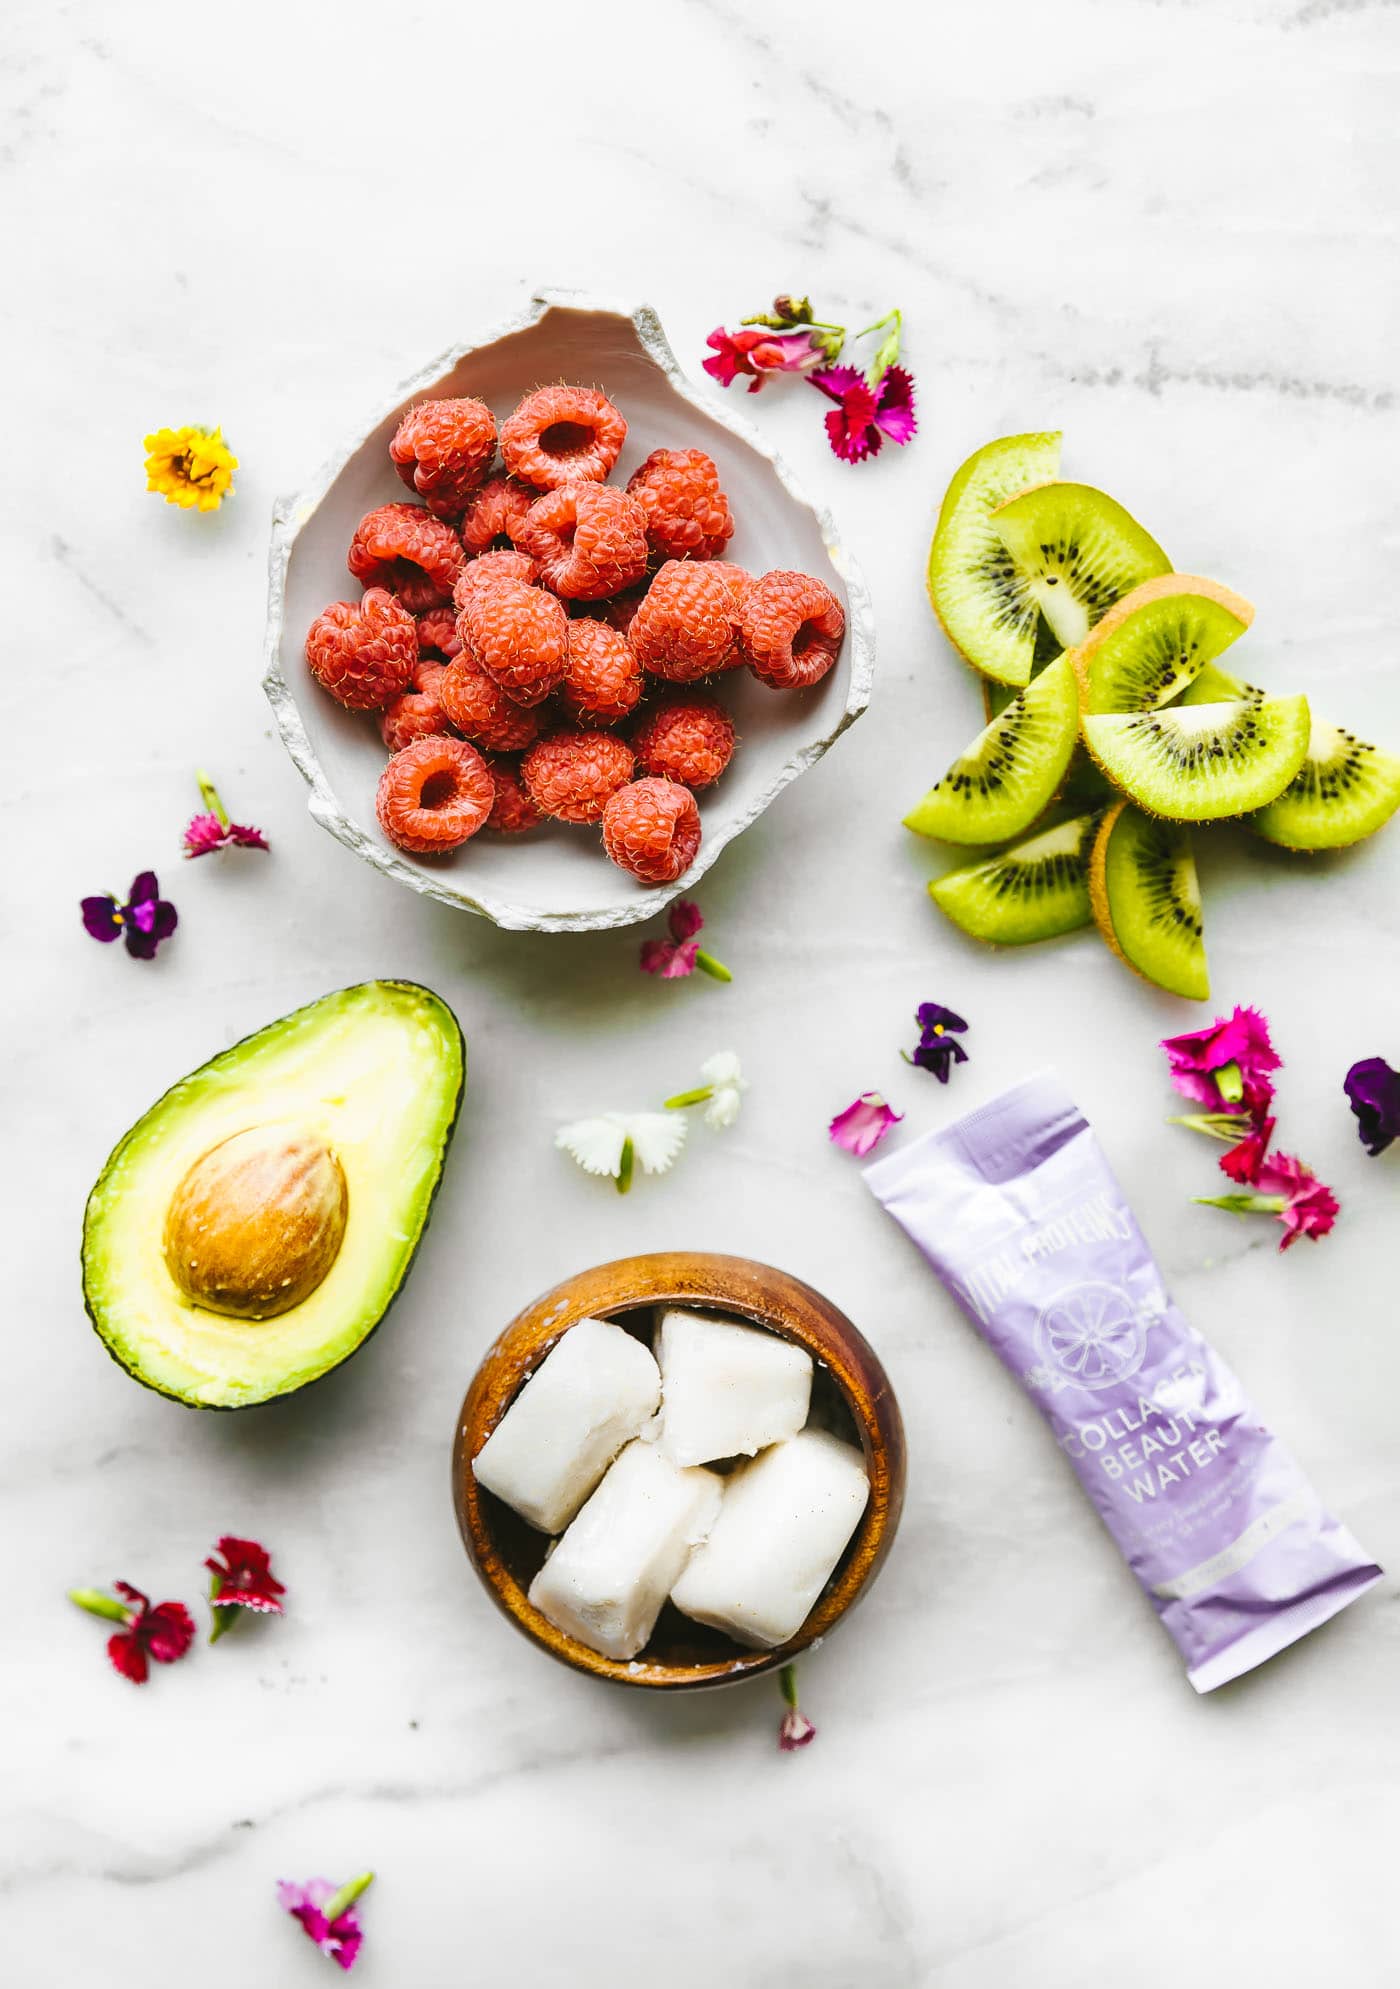 Ingredients for raspberry, kiwi, avocado smoothie arranged together on counter.